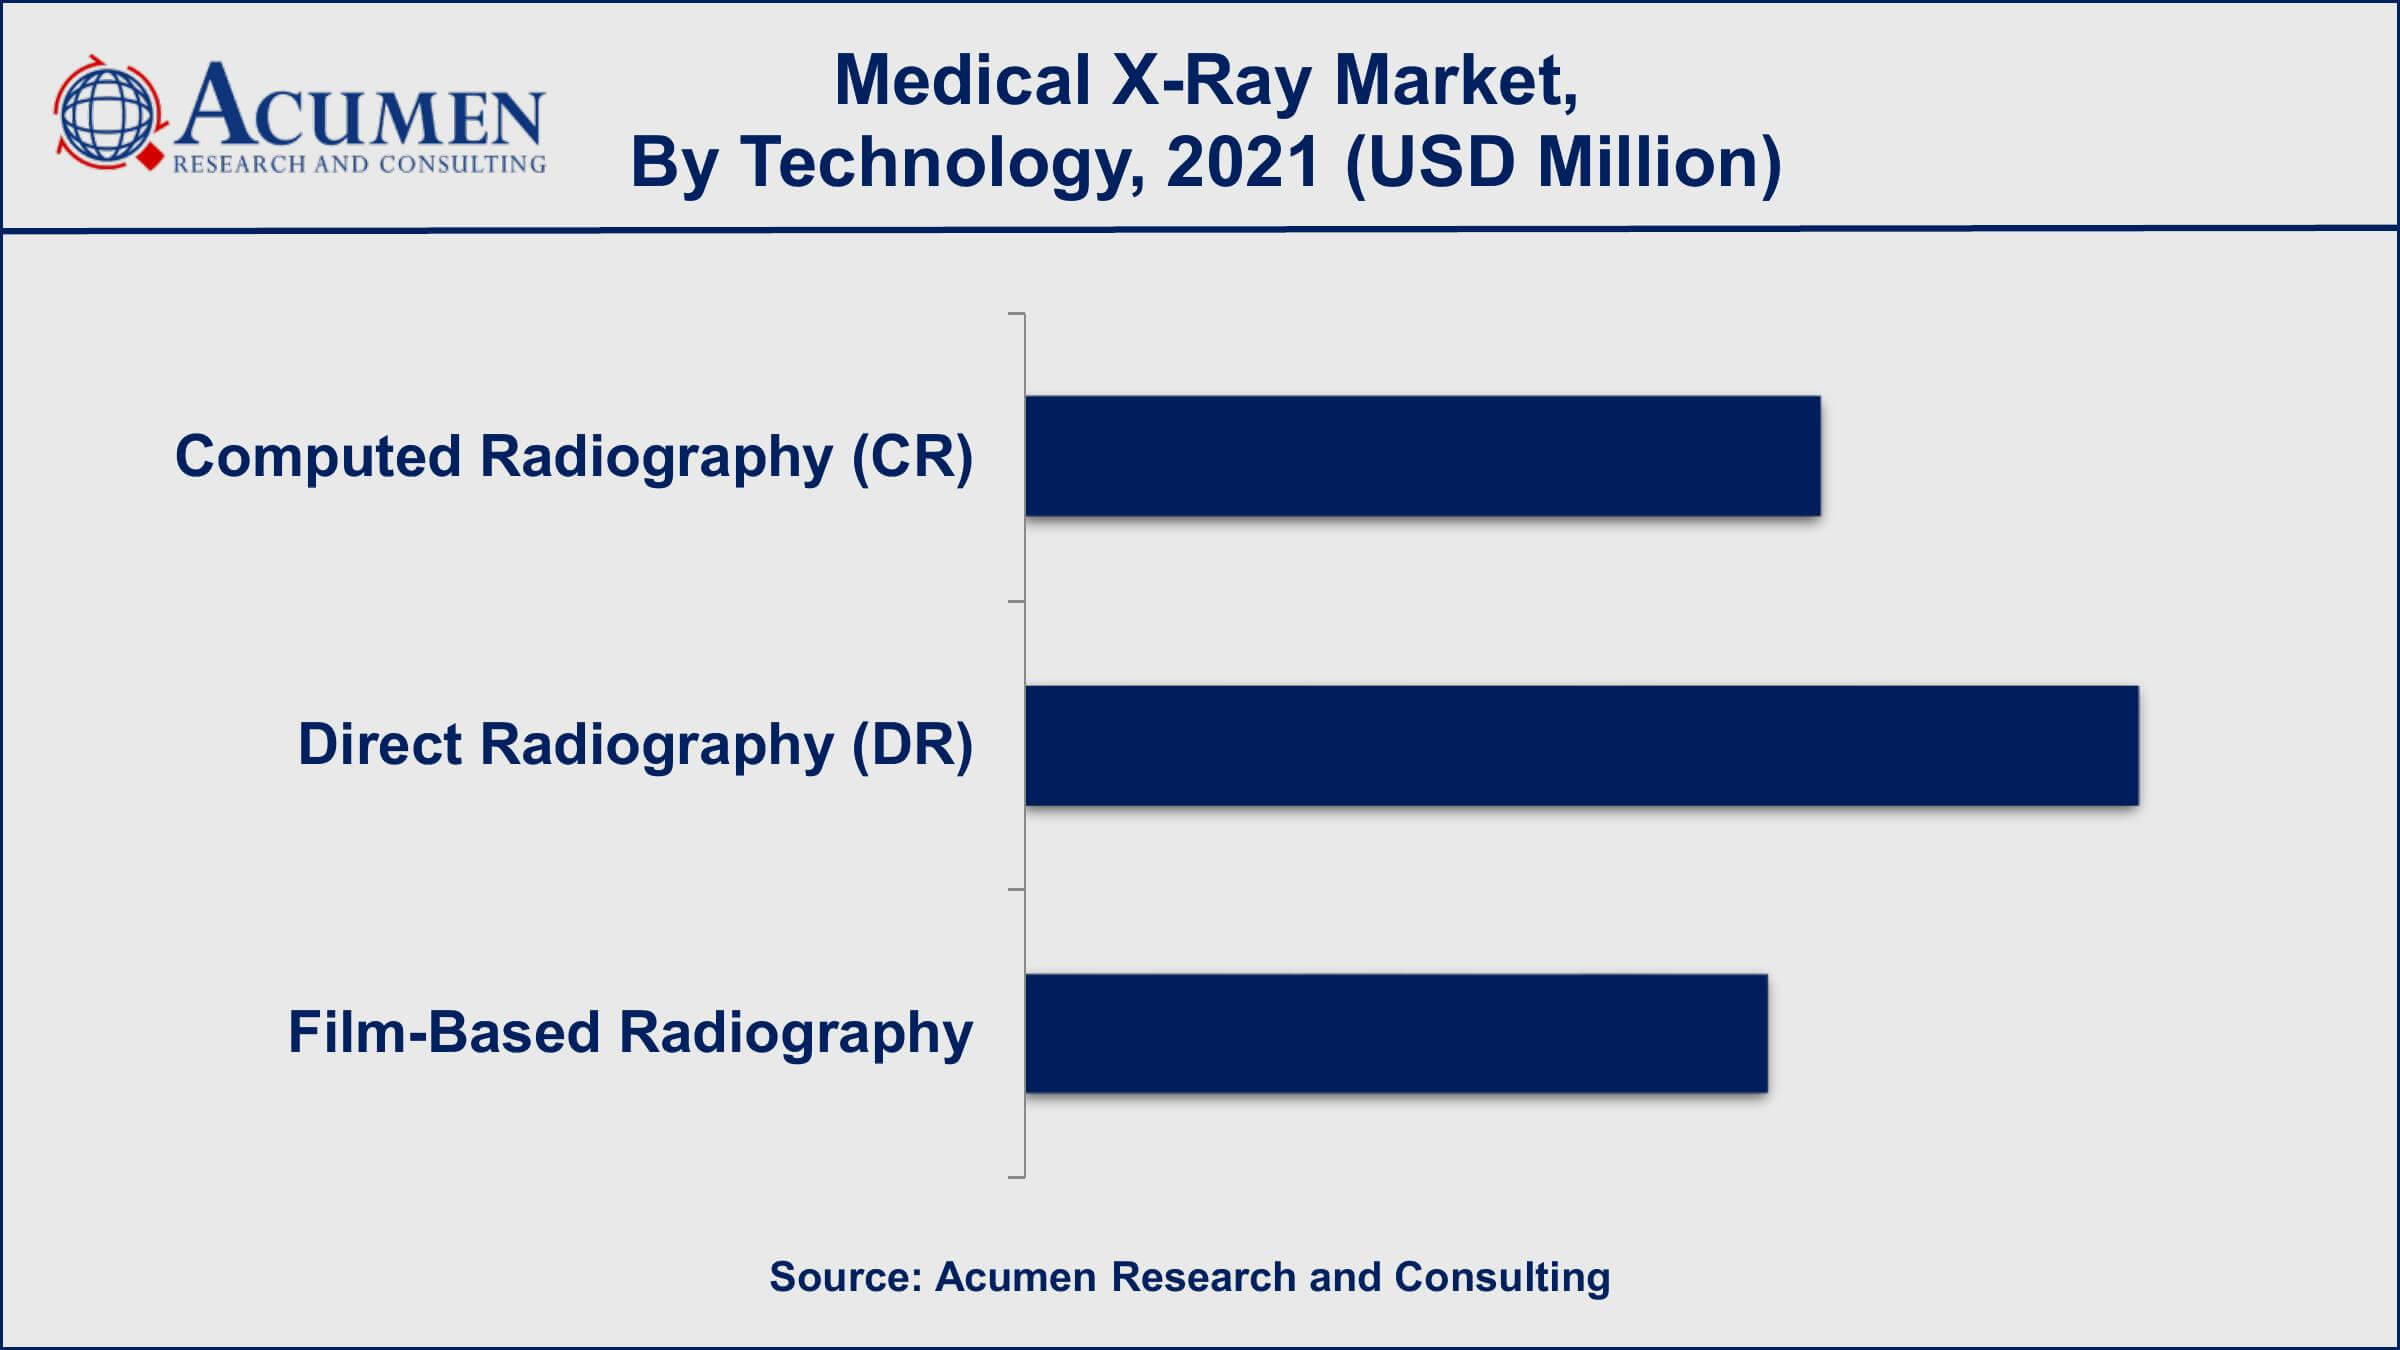 Medical X-Ray Market Size